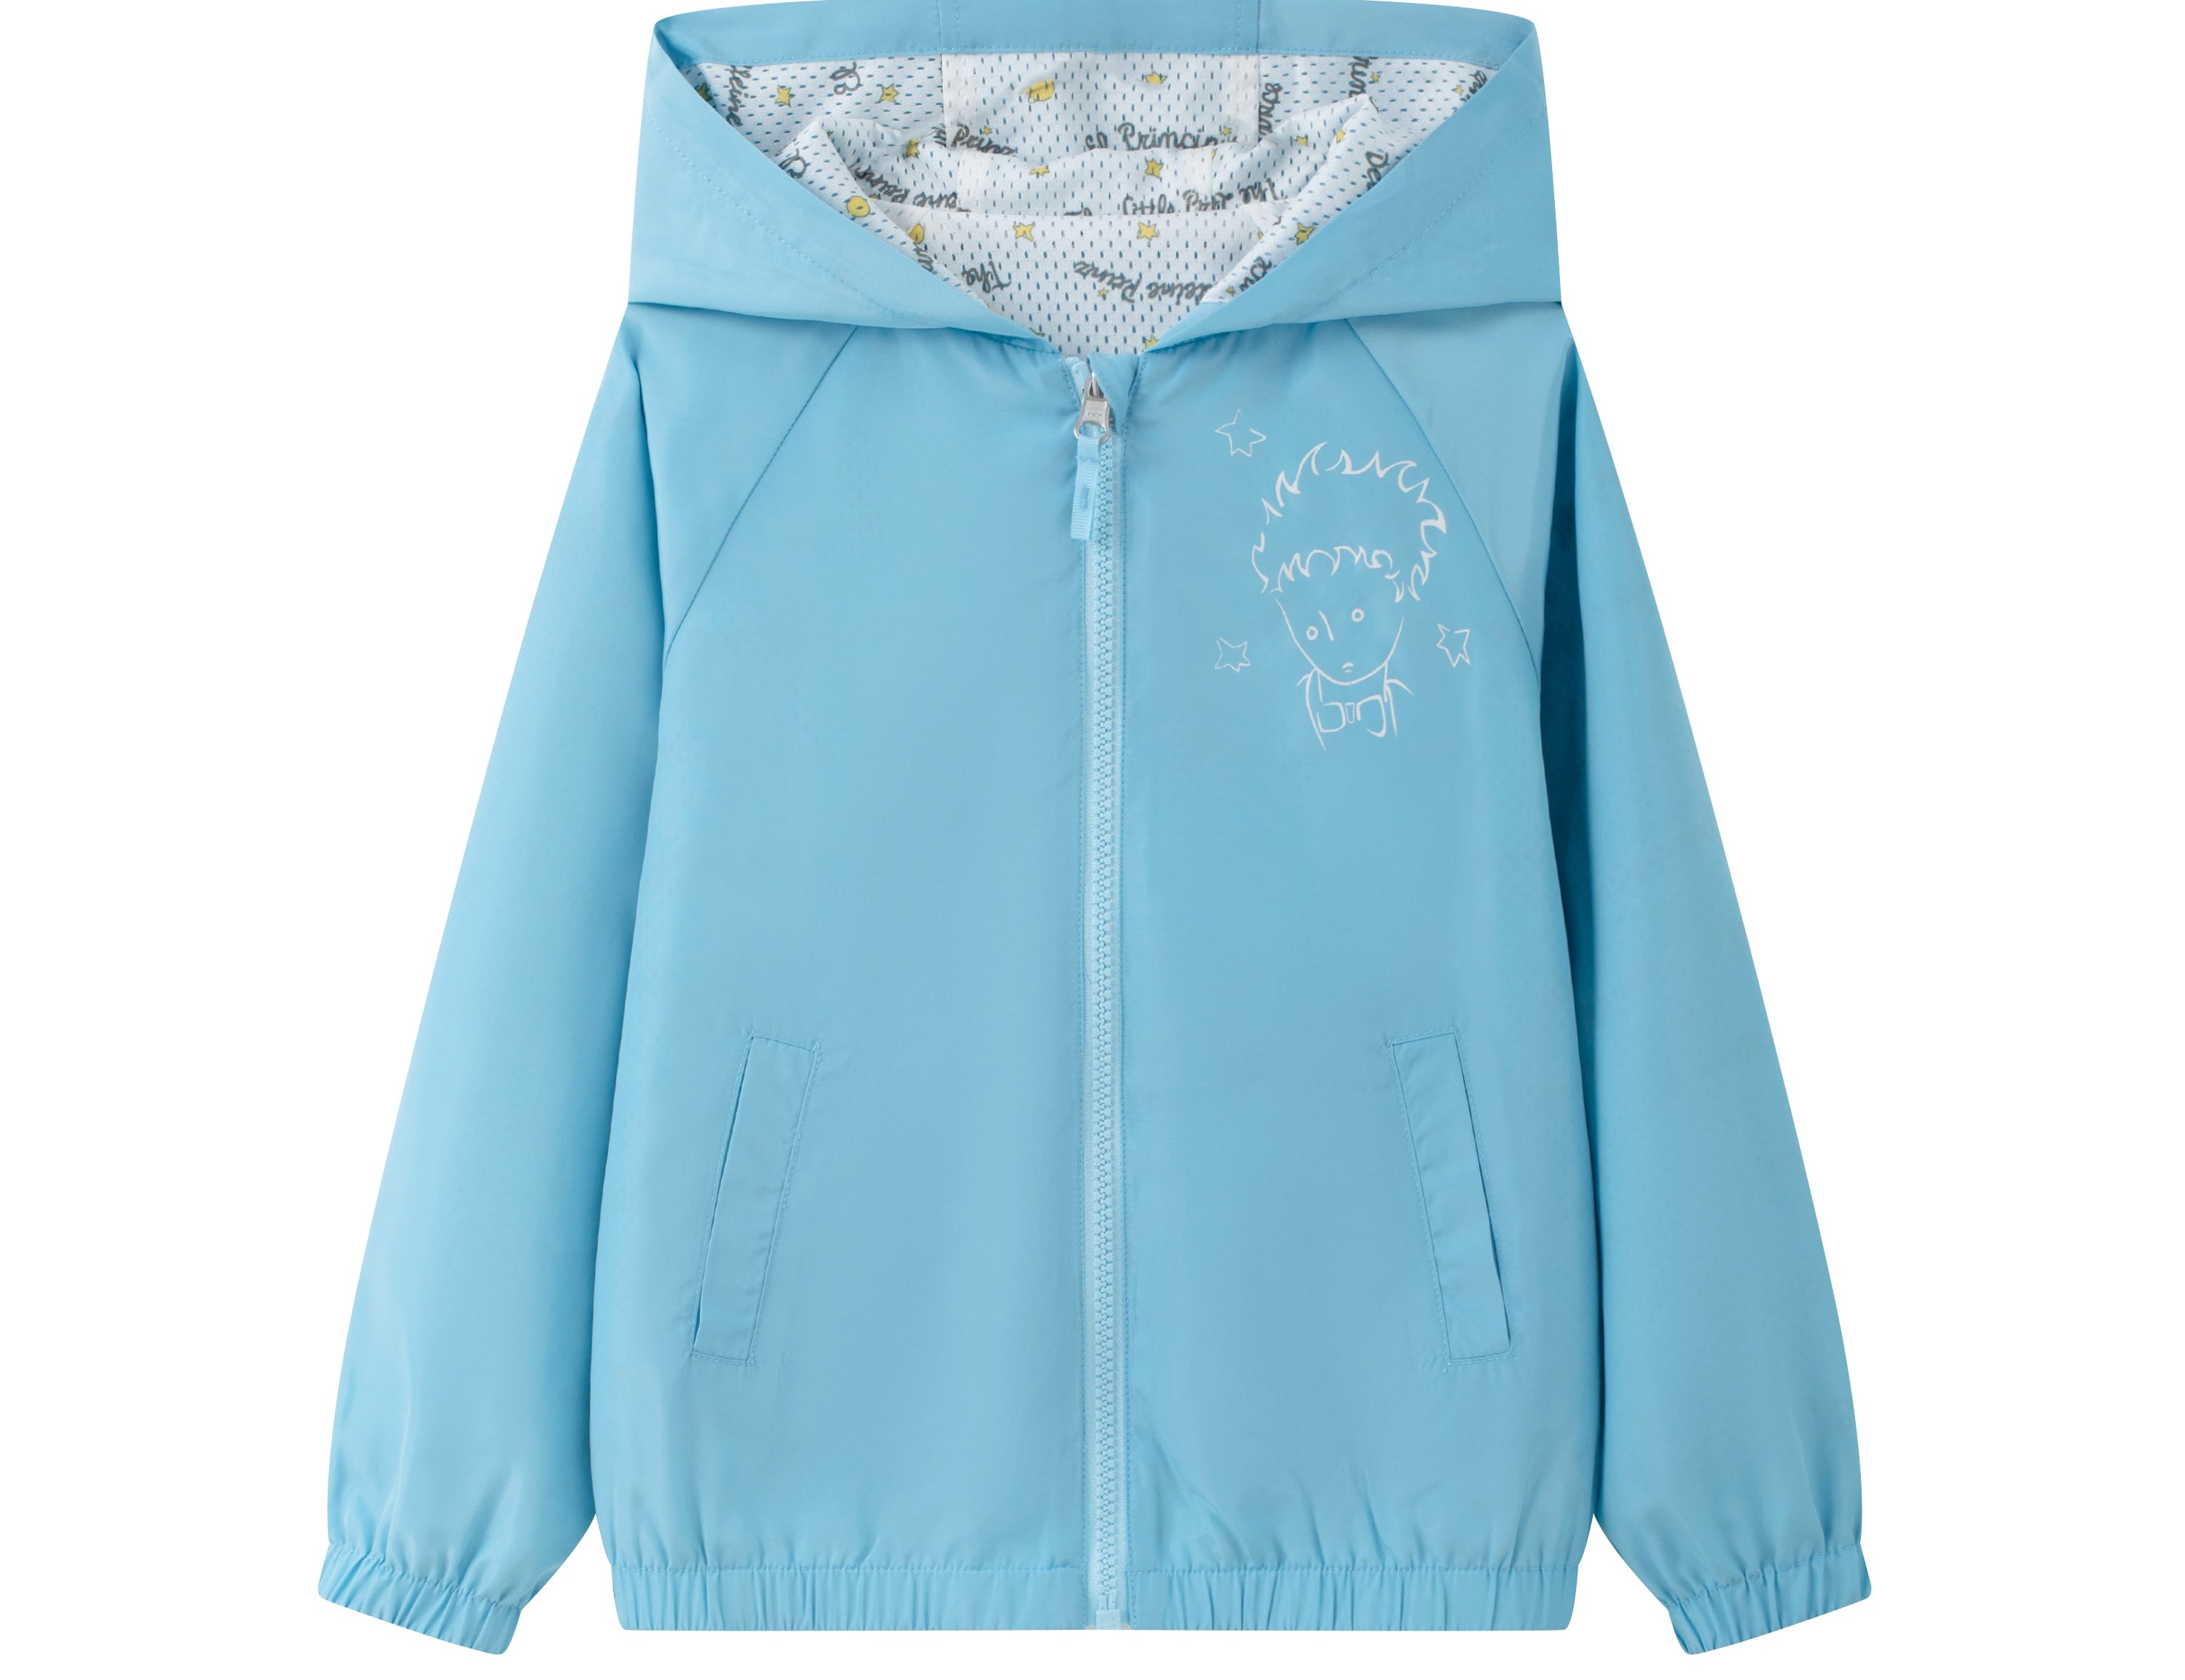 Vauva x Le Petit Prince - Kids Reversible Jacket (Blue) product image outside front